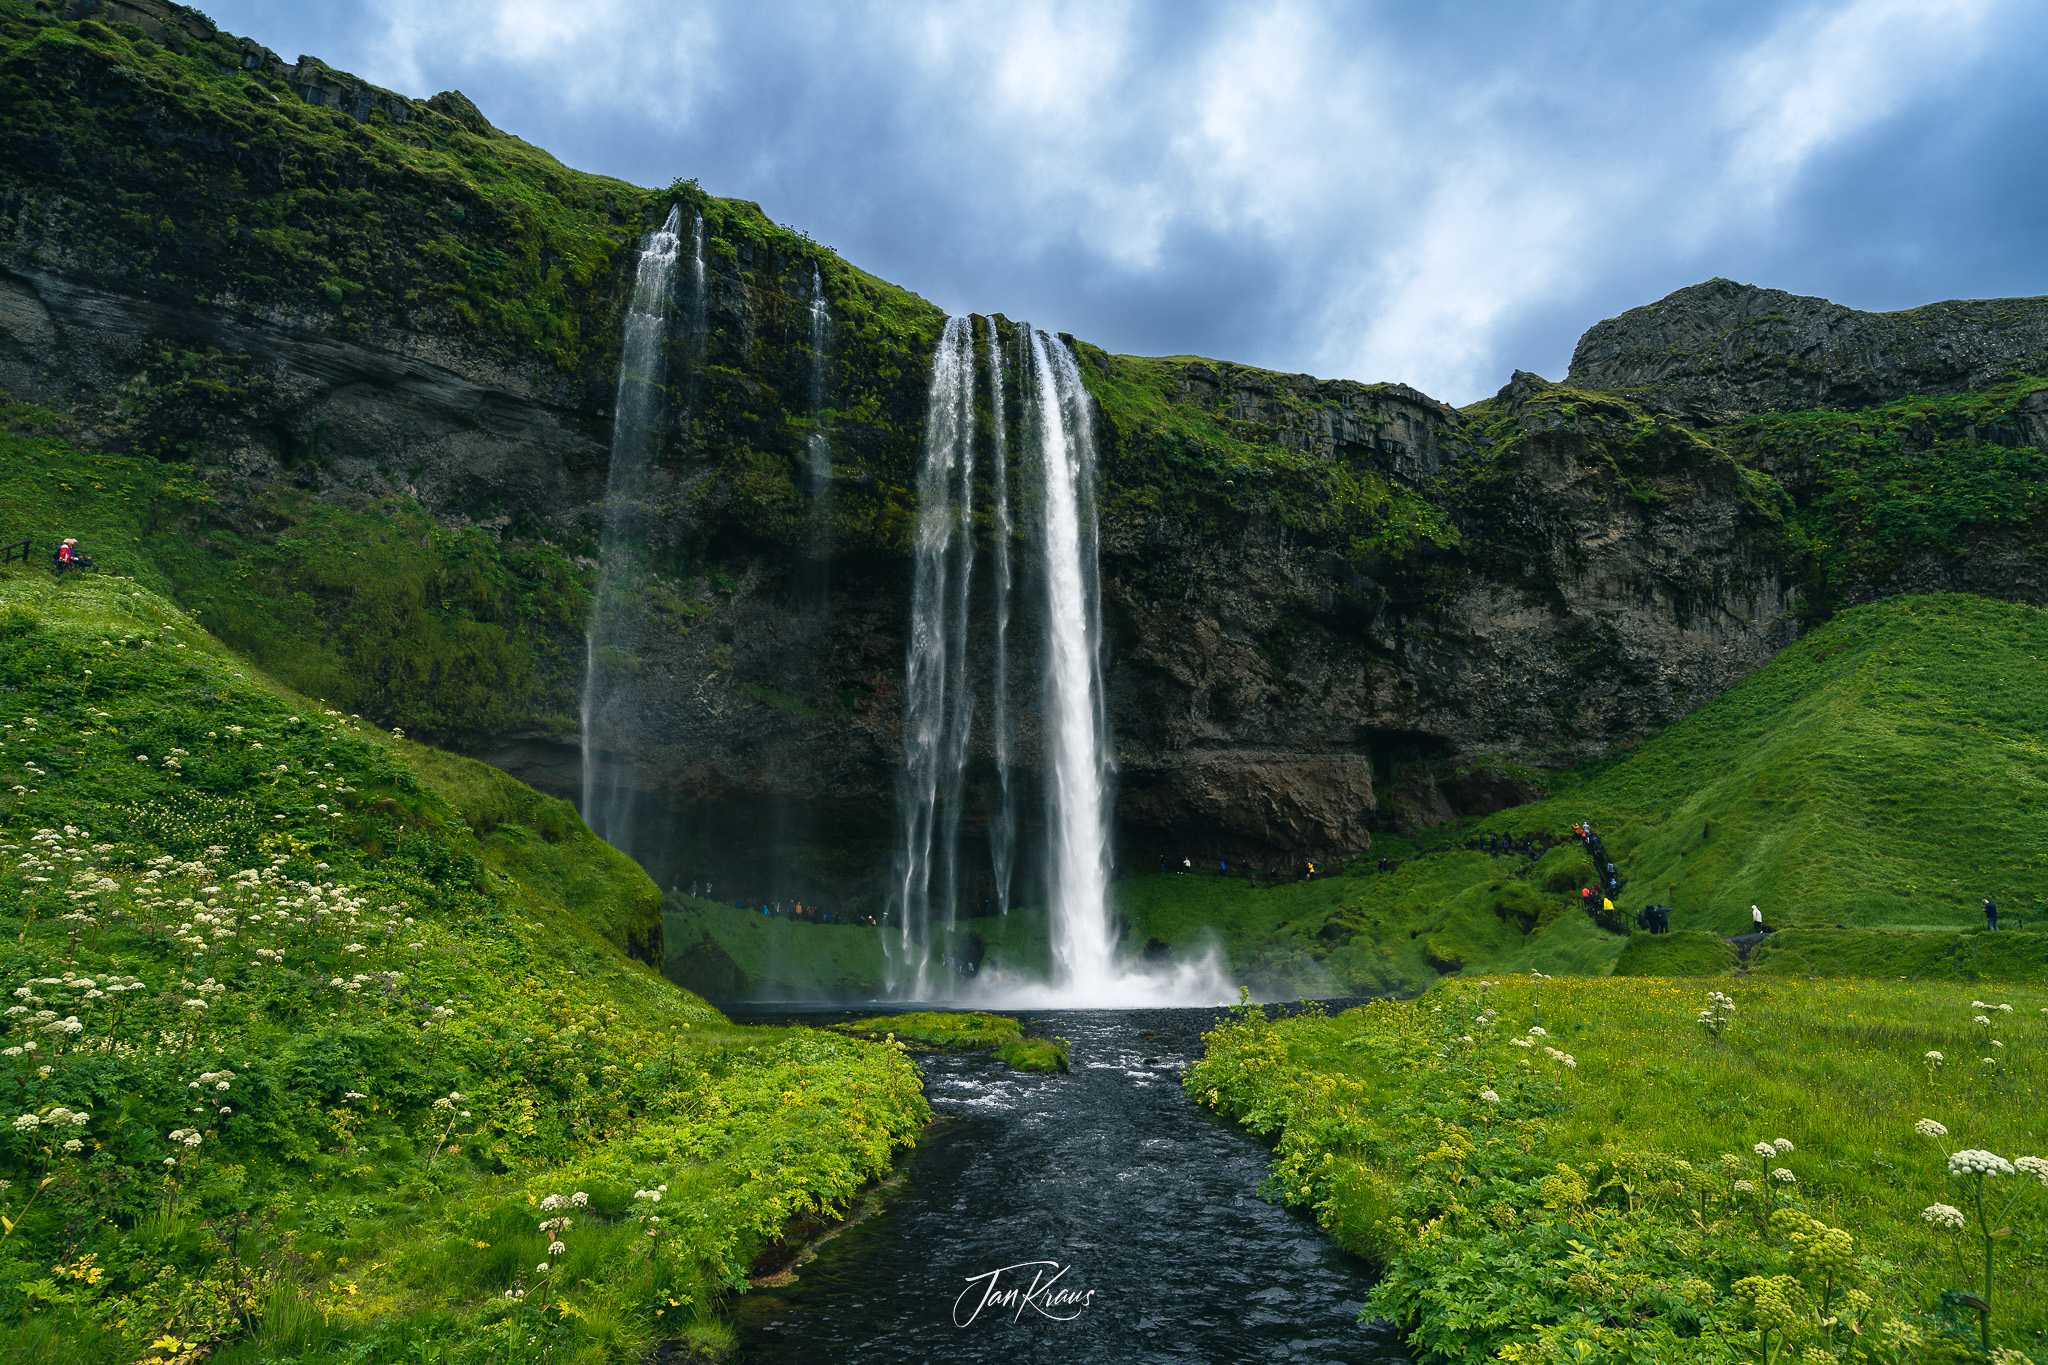 Image from Iceland album